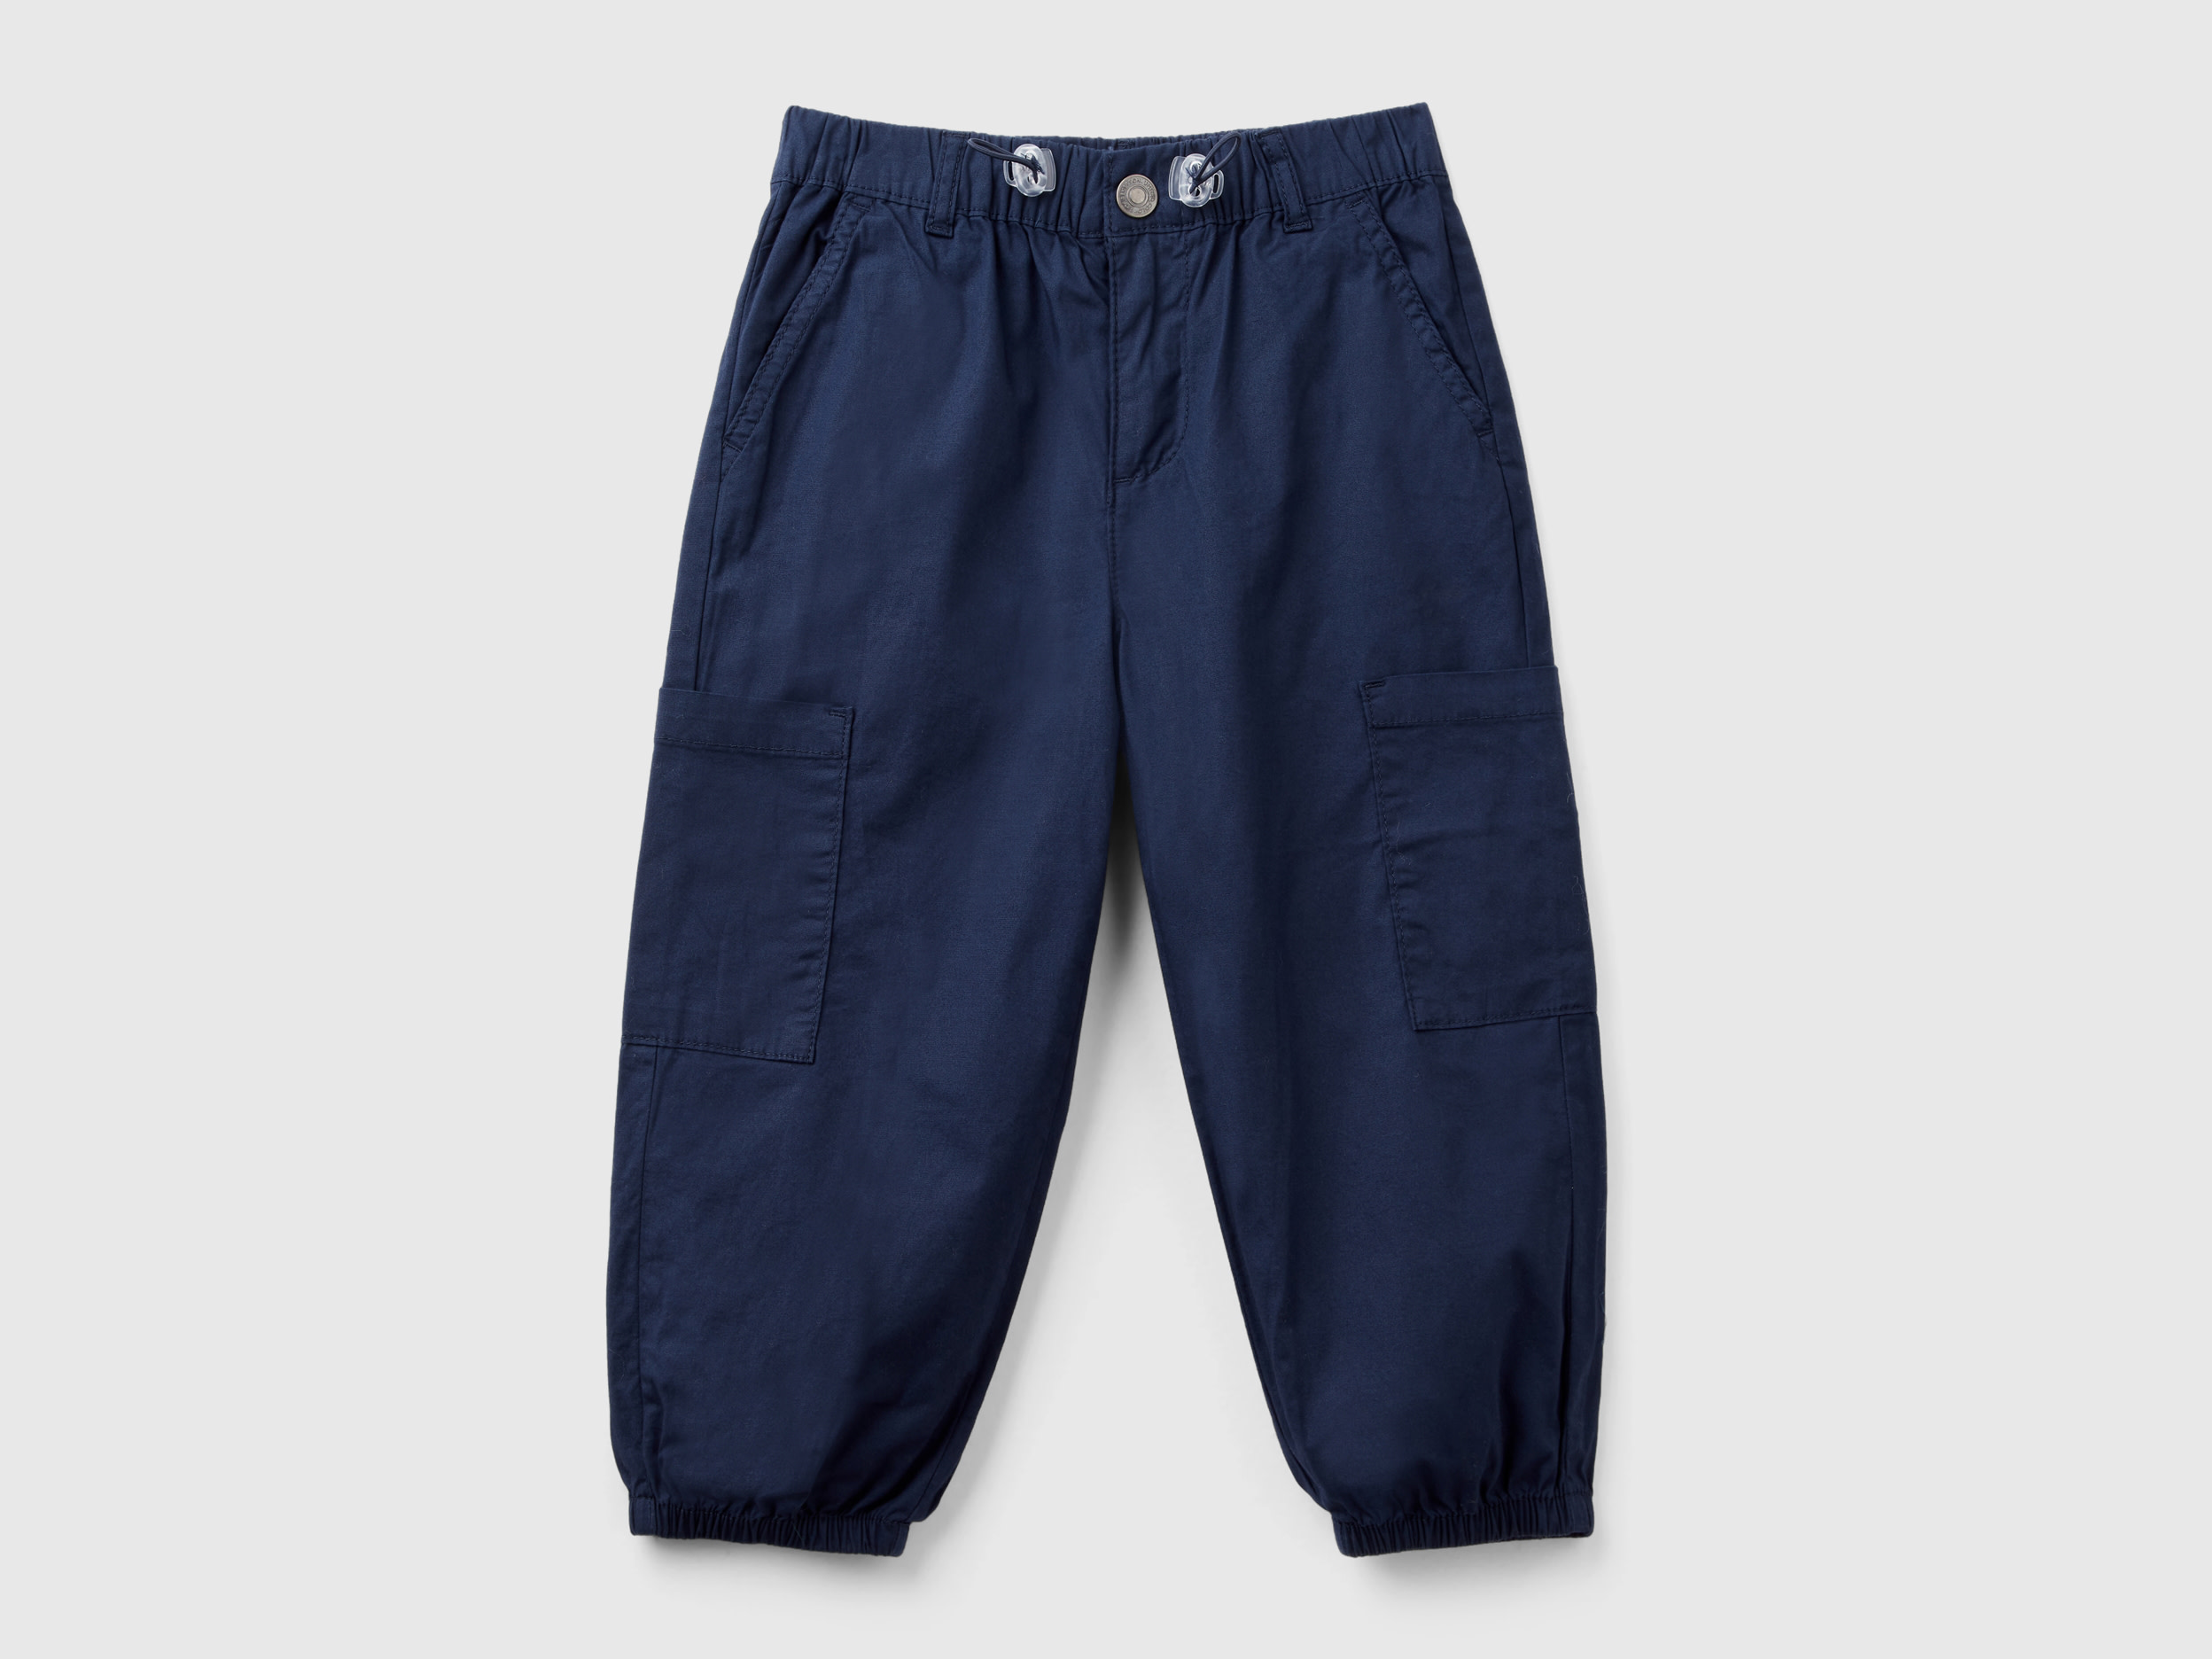 Benetton, Stretch Cotton Parachute Trousers, size 12-18, Dark Blue, Kids